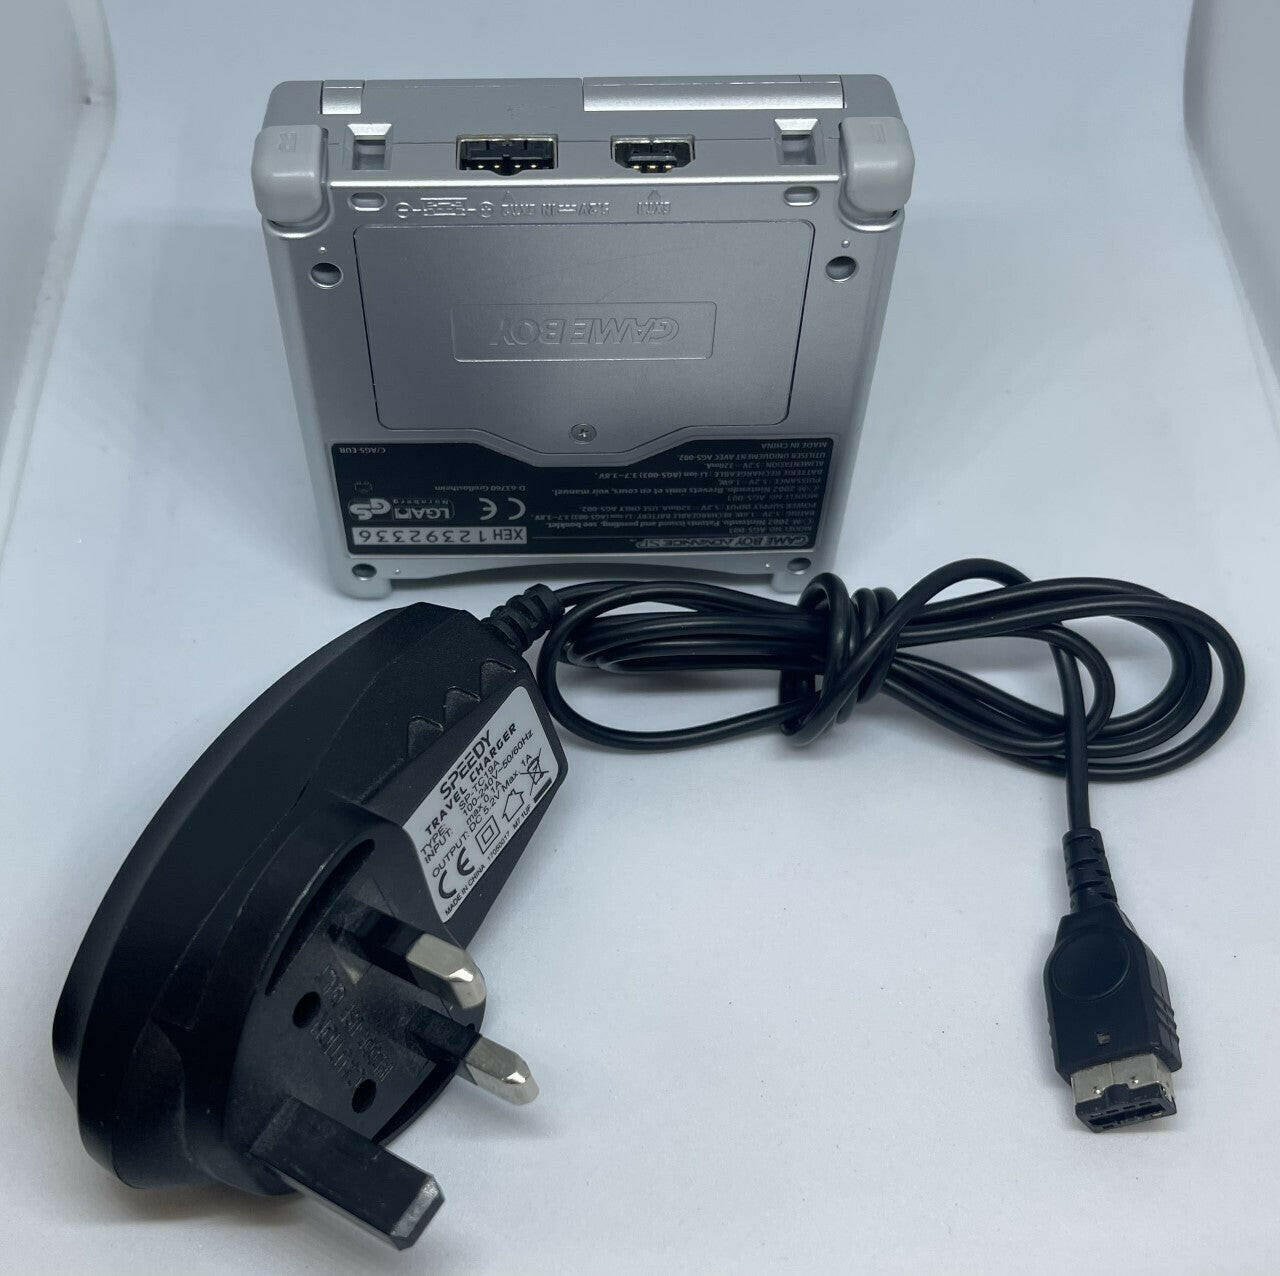 Nintendo Game Boy Advance SP Silver Console - AGS-001